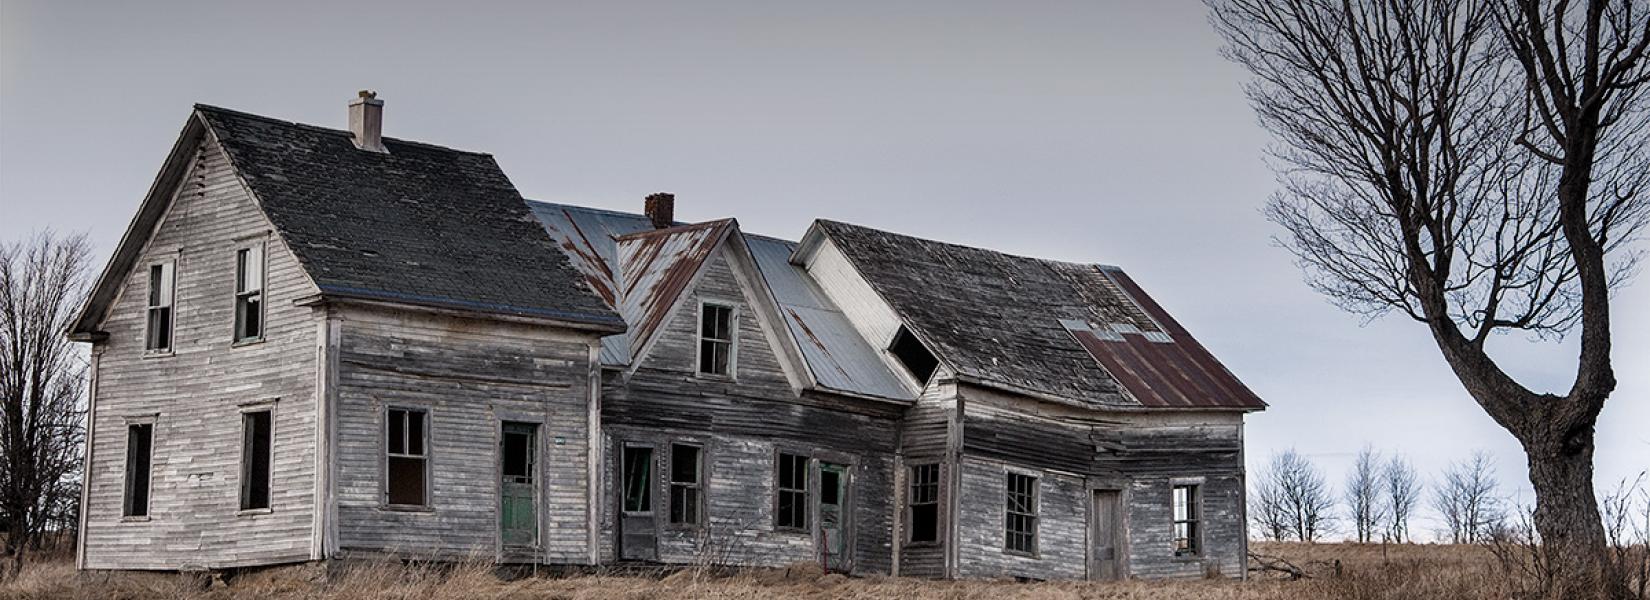 Abandoned house - Scotstown area | Photo by Jarold Dumouchel